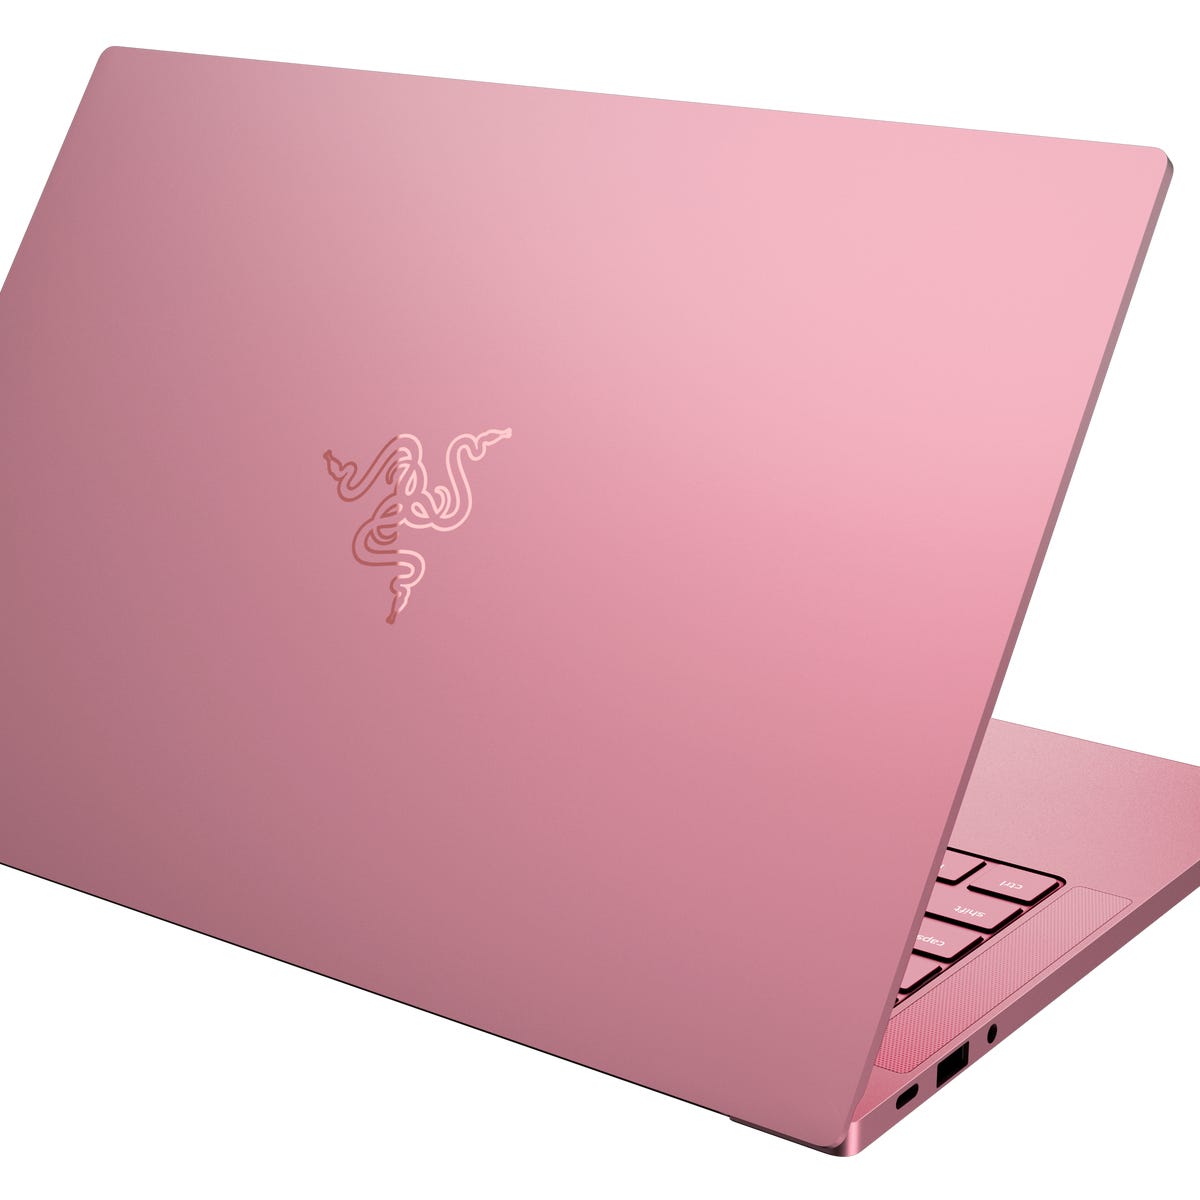 Razer unveils Stealth laptop and gaming accessories in Quartz Pink ...